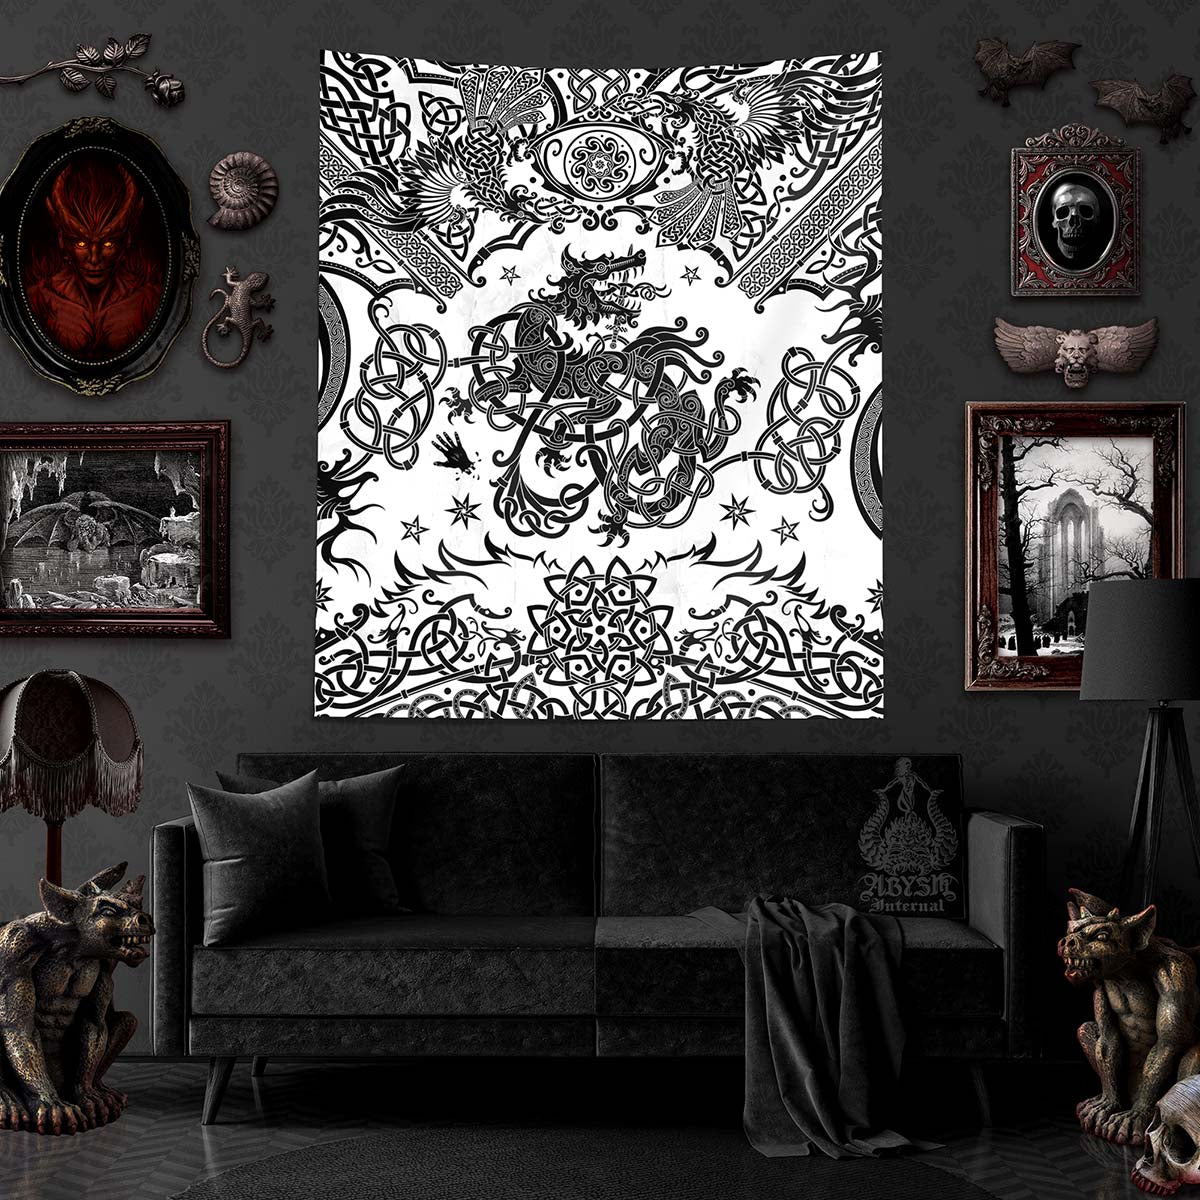 Tapestries - Abysm Internal